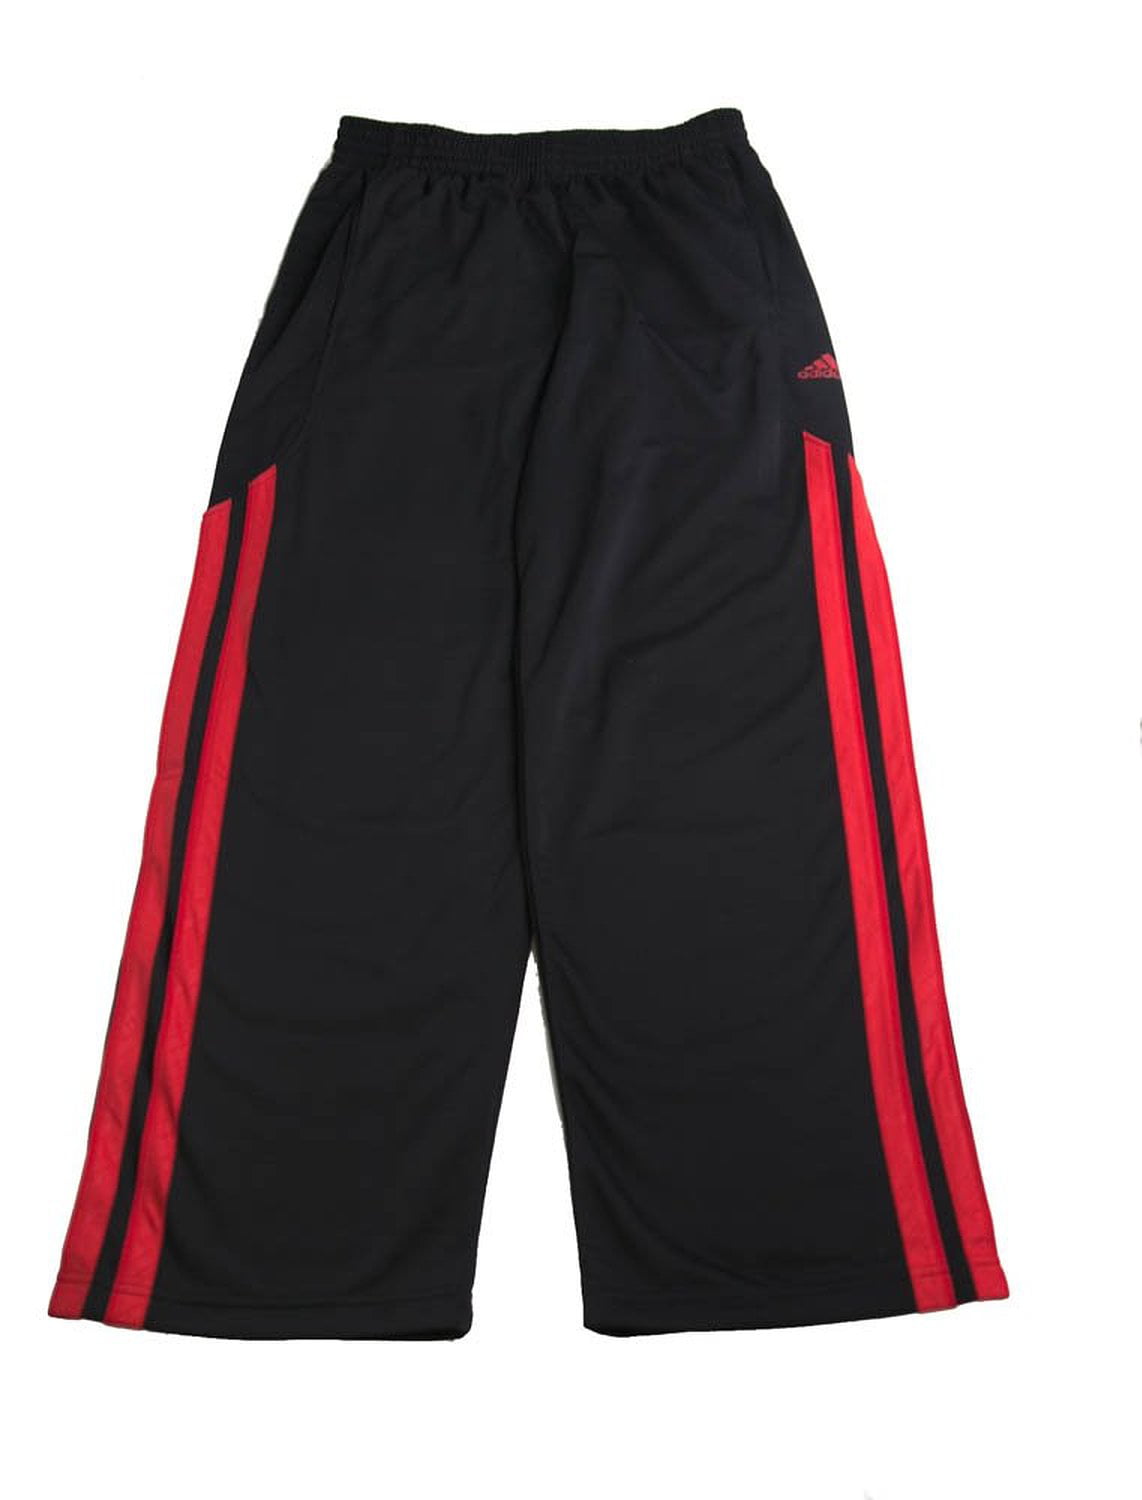 Adidas FS Pant Men's Basketball/Running Sweats Black/Lgtscarlt ...